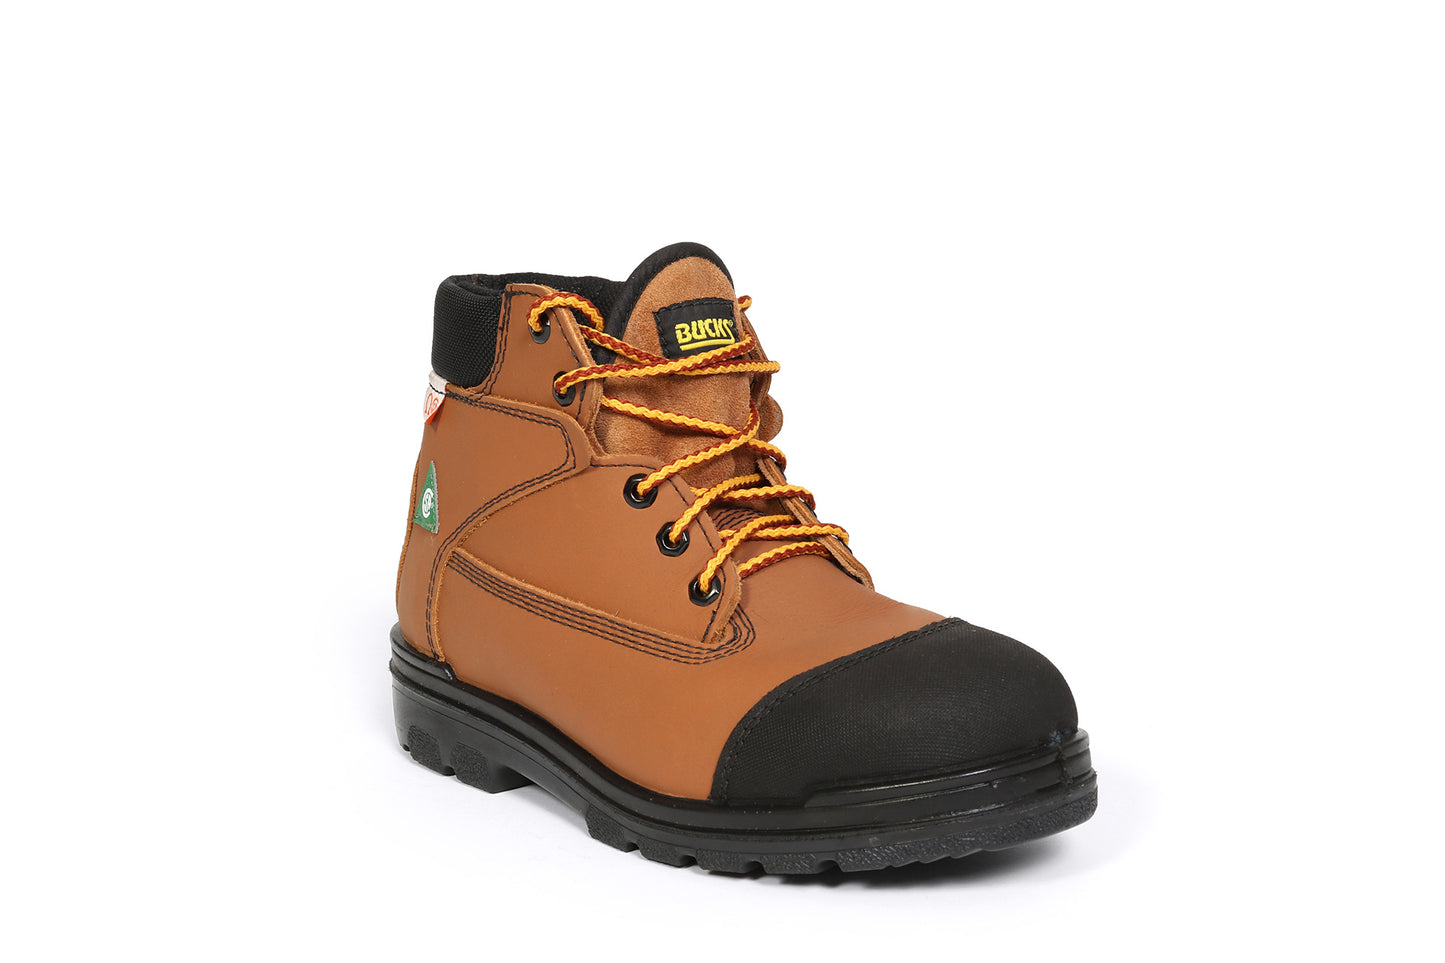 Bucks® Tracker - 6" Lace-up CSA Steel-toe Work Boot